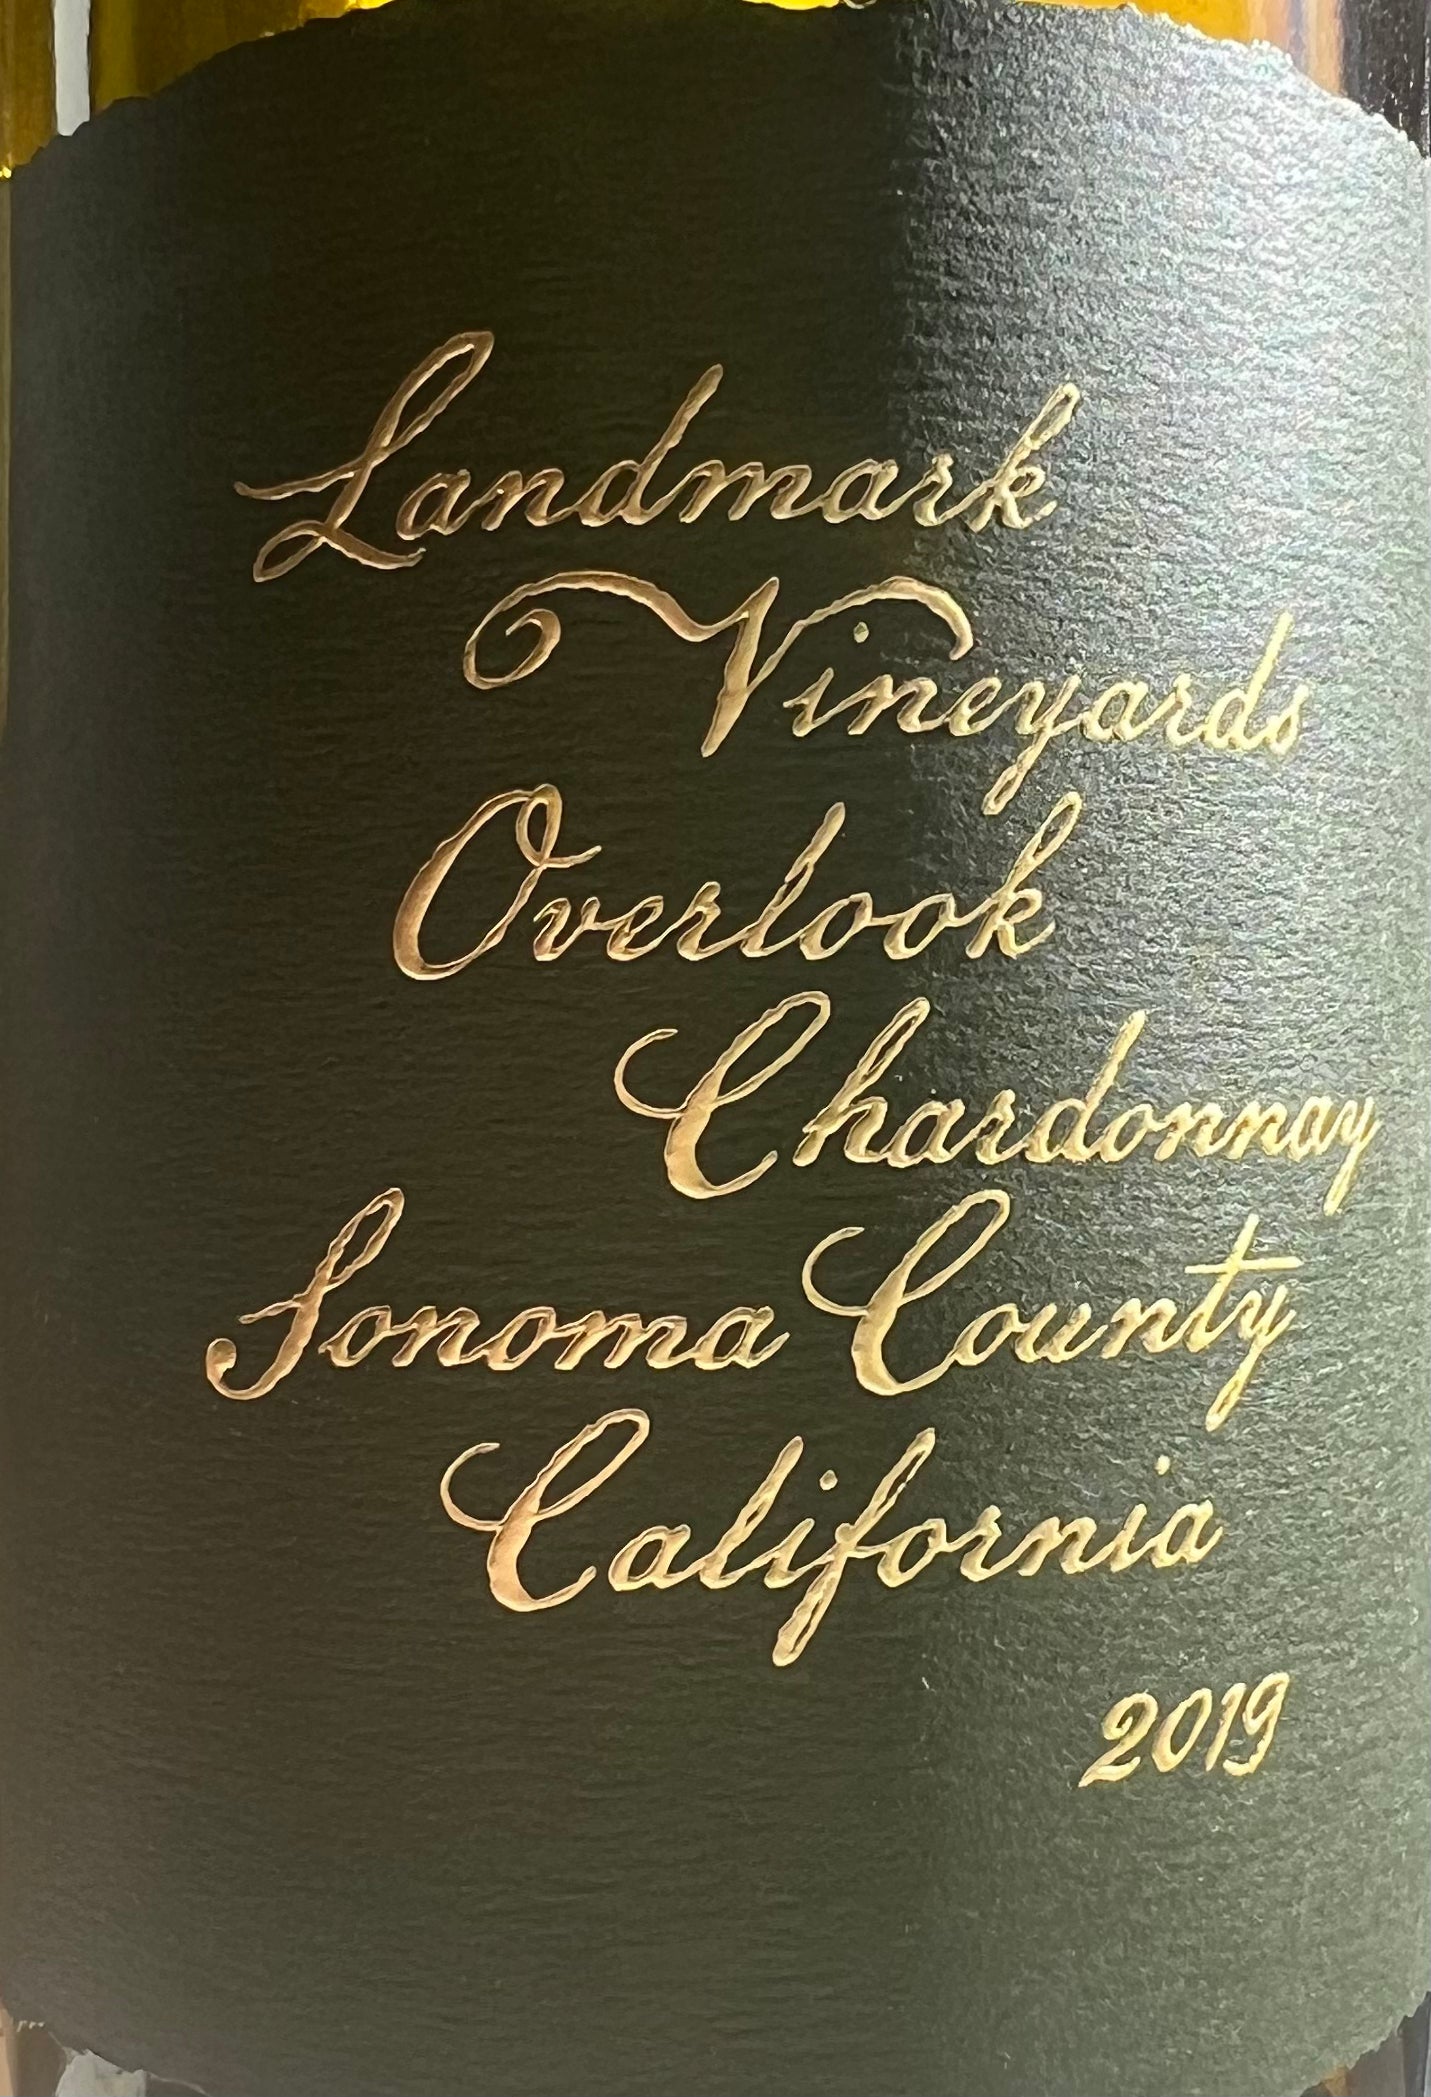 Landmark - Chardonnay